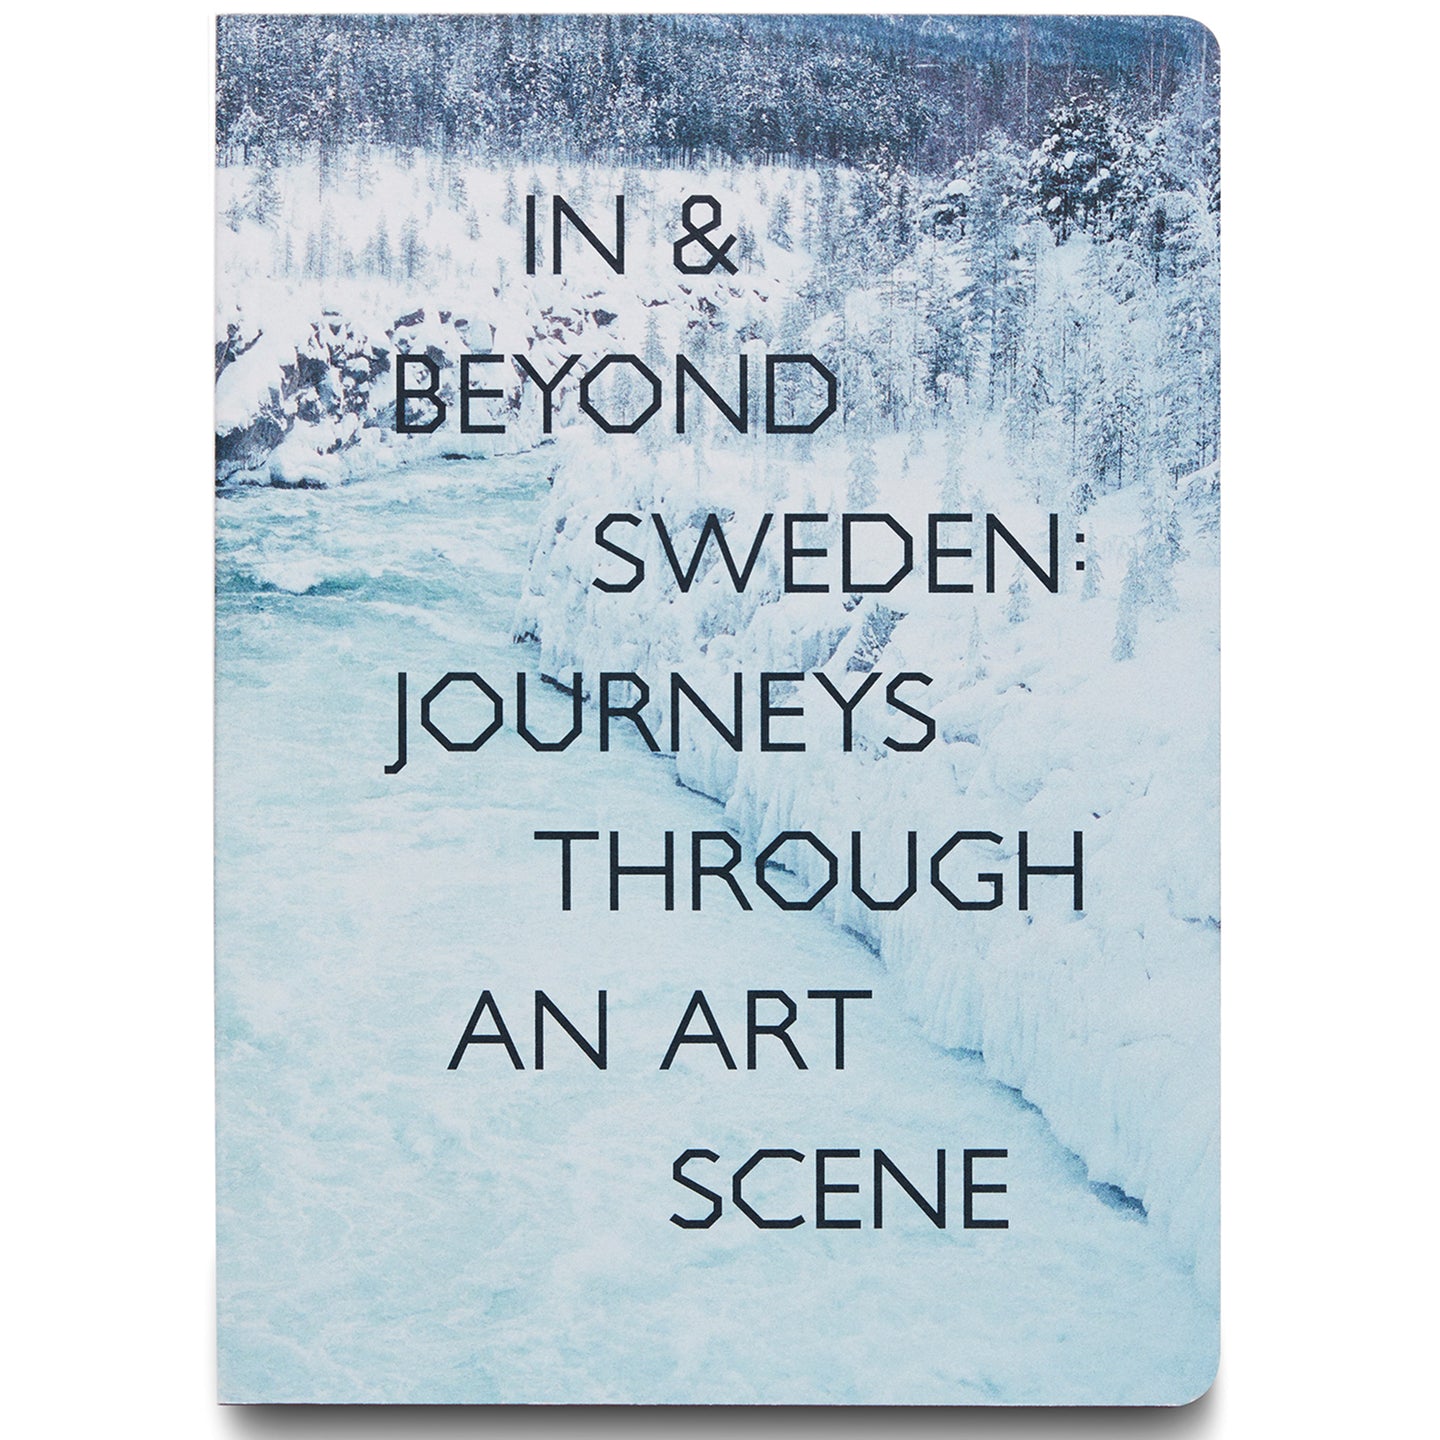 IN & BEYOND SWEDEN: JOURNEYS THROUGH AN ART SCENE